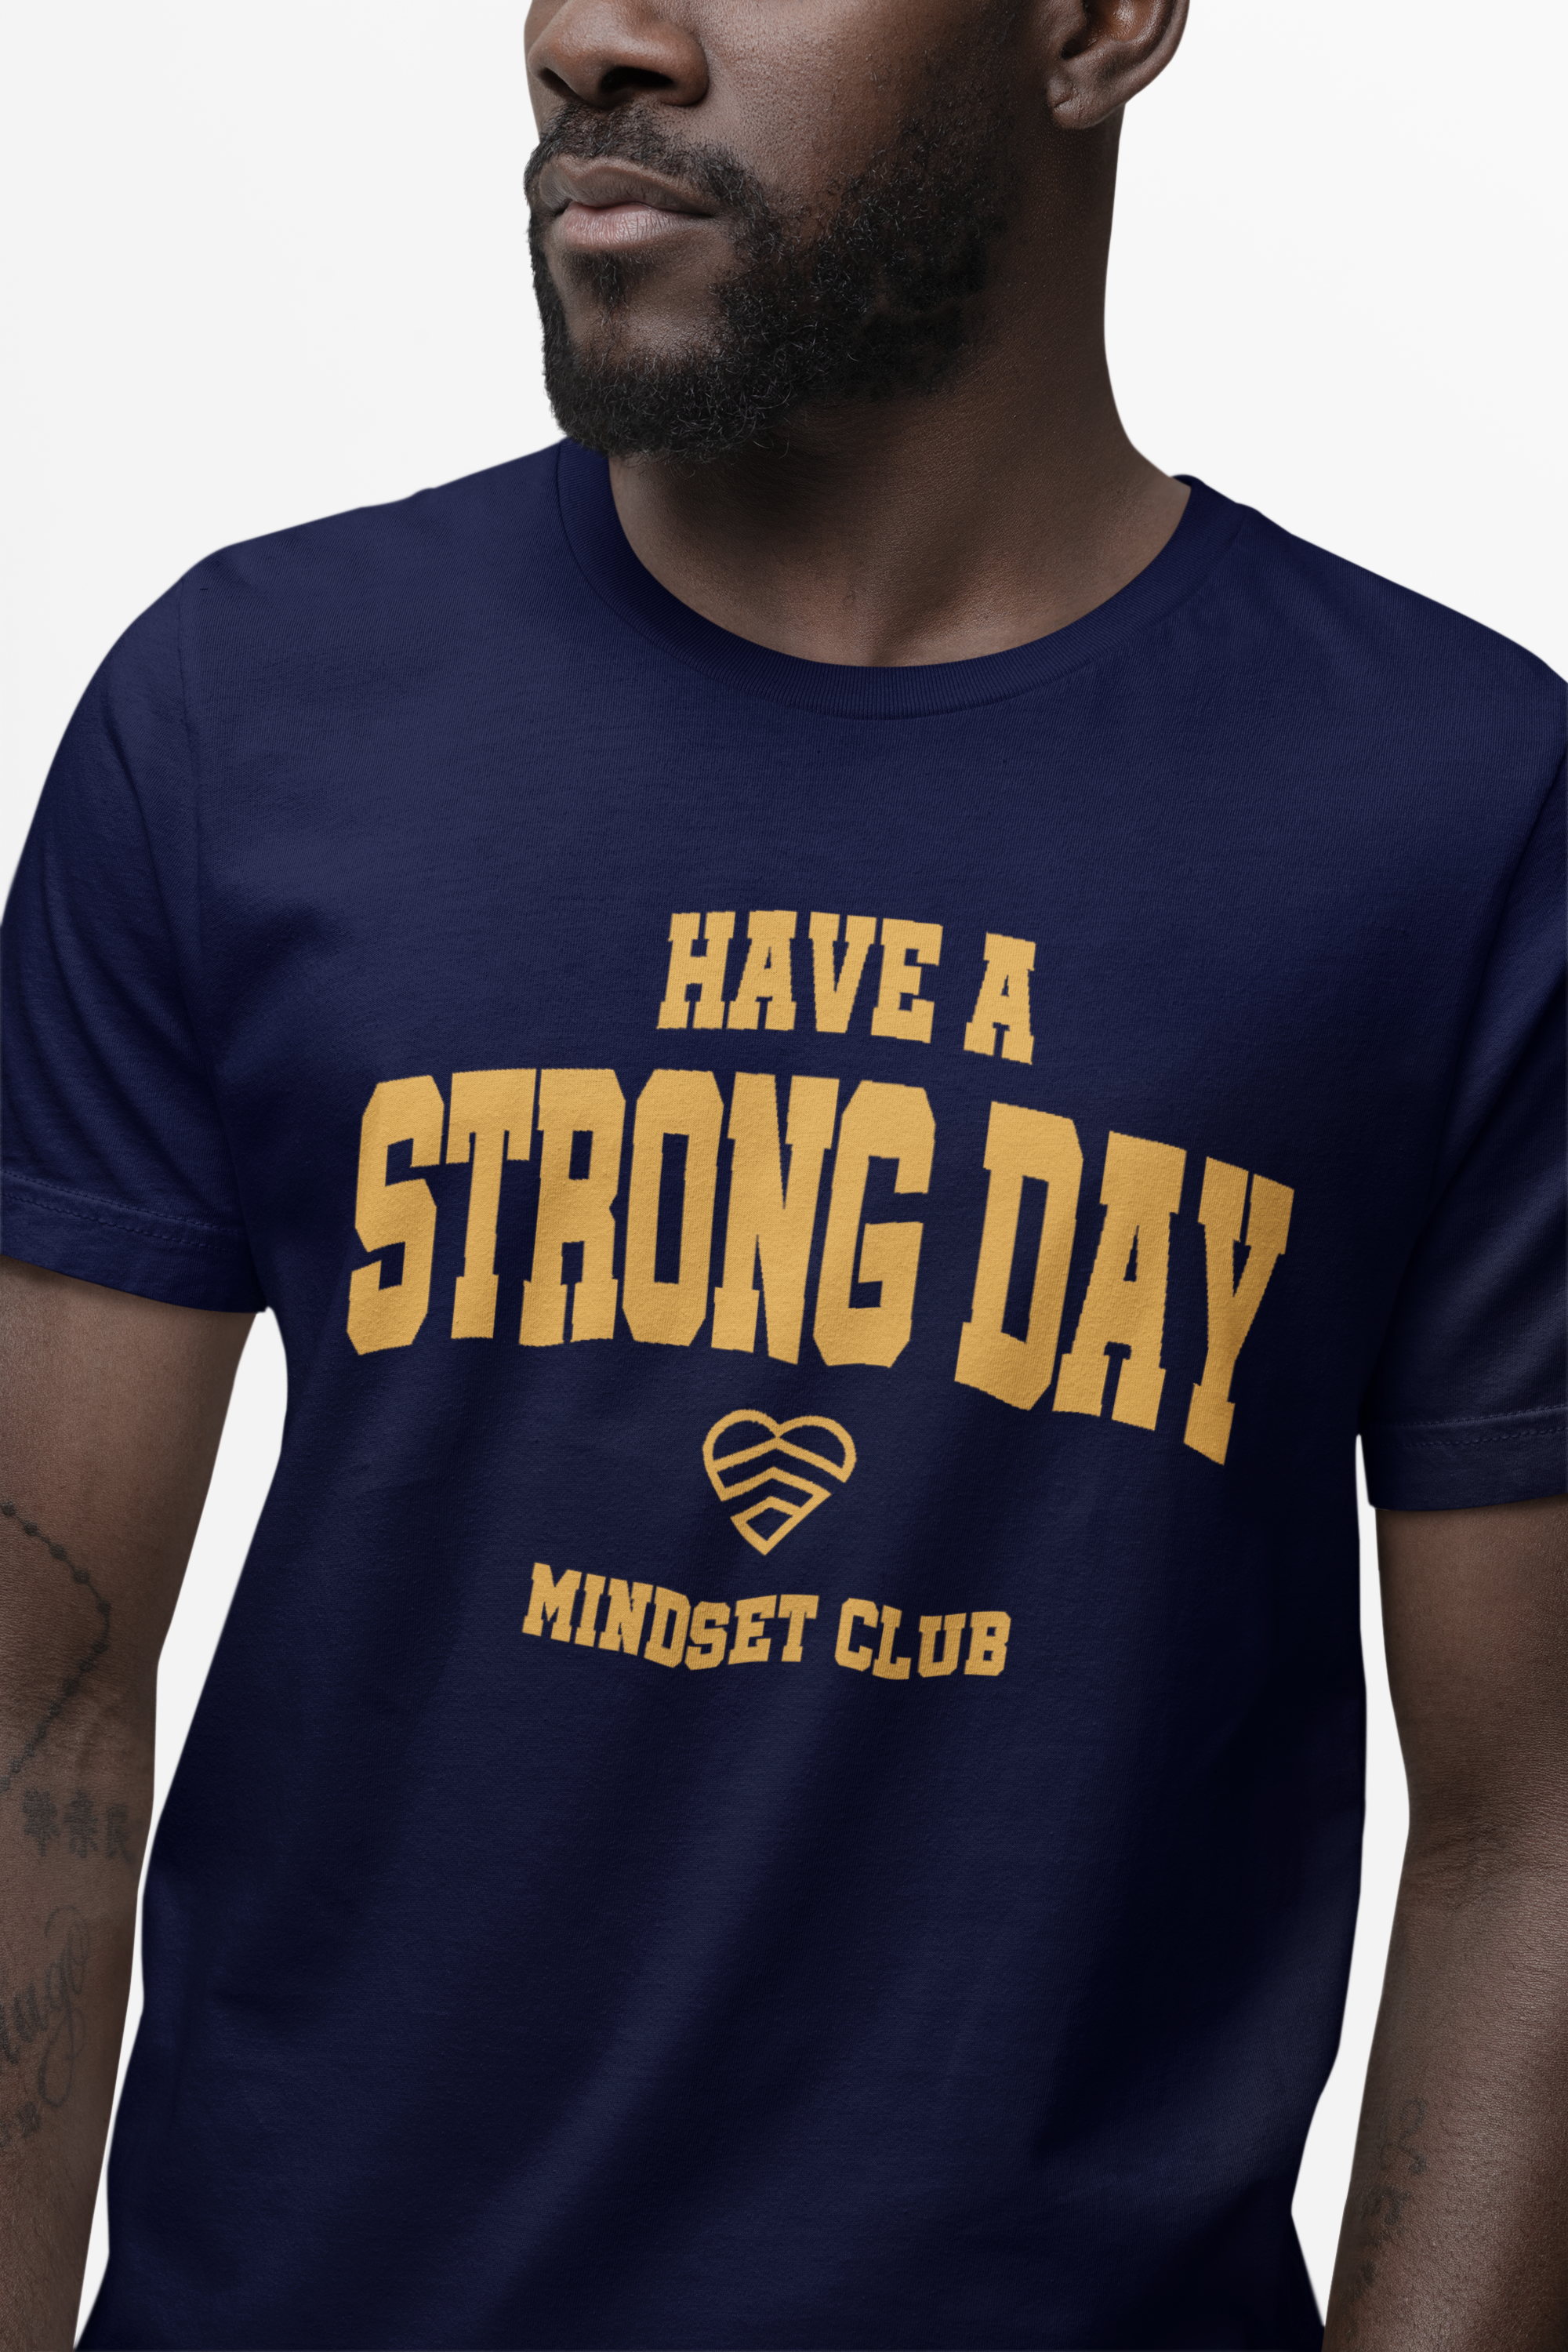 Mindset Club Statement Shirt - Navy